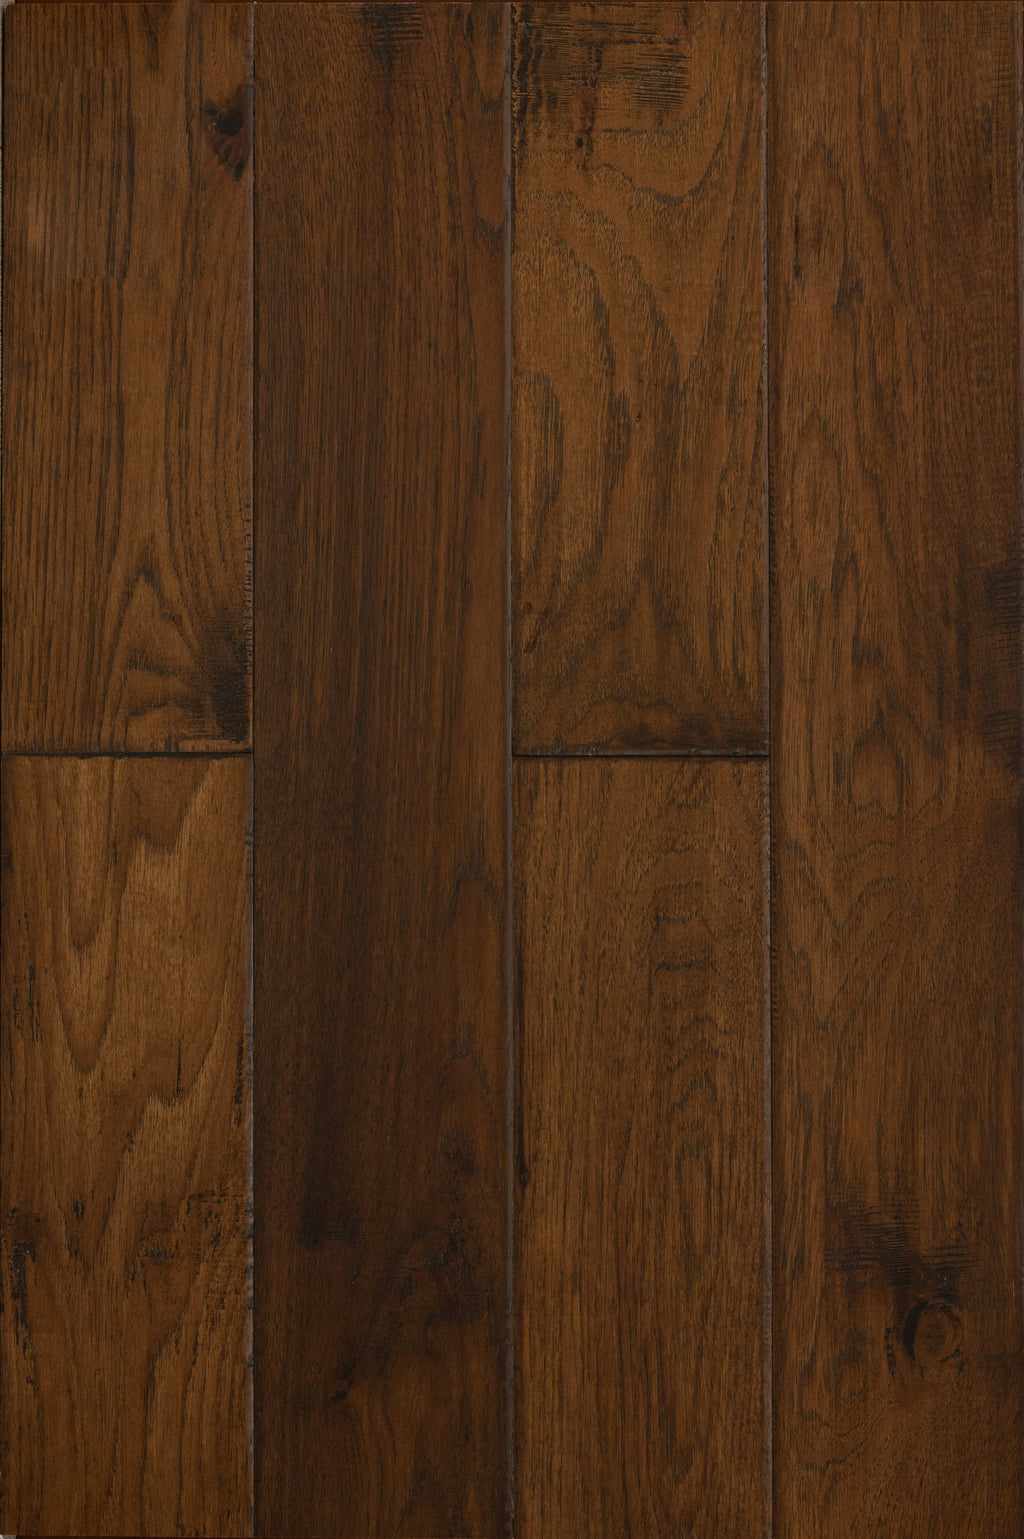 East West Furniture SP-5HH04 Sango Premier Engineered Wood Flooring - European Oak - 1/2 in x 7 in x Random Length Handscraped, 26.24 sqft/box, Spice Brown